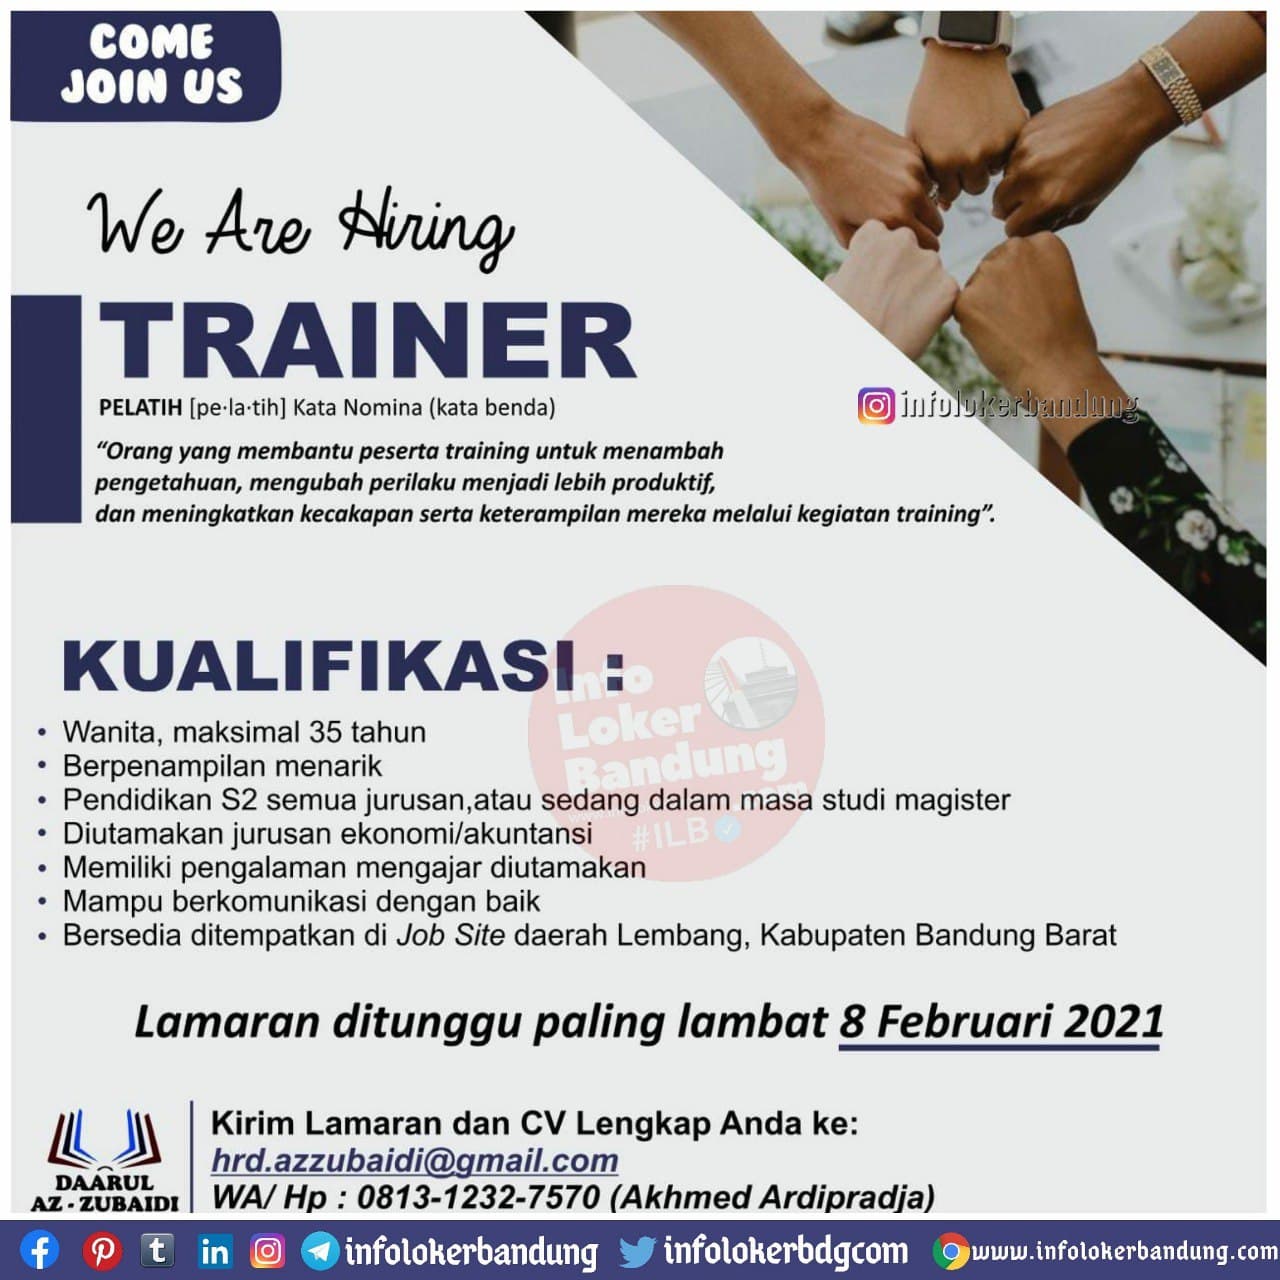 Lowongan Kerja Trainer Daarul Az-Zubaidi Lembang Bandung Januari 2021